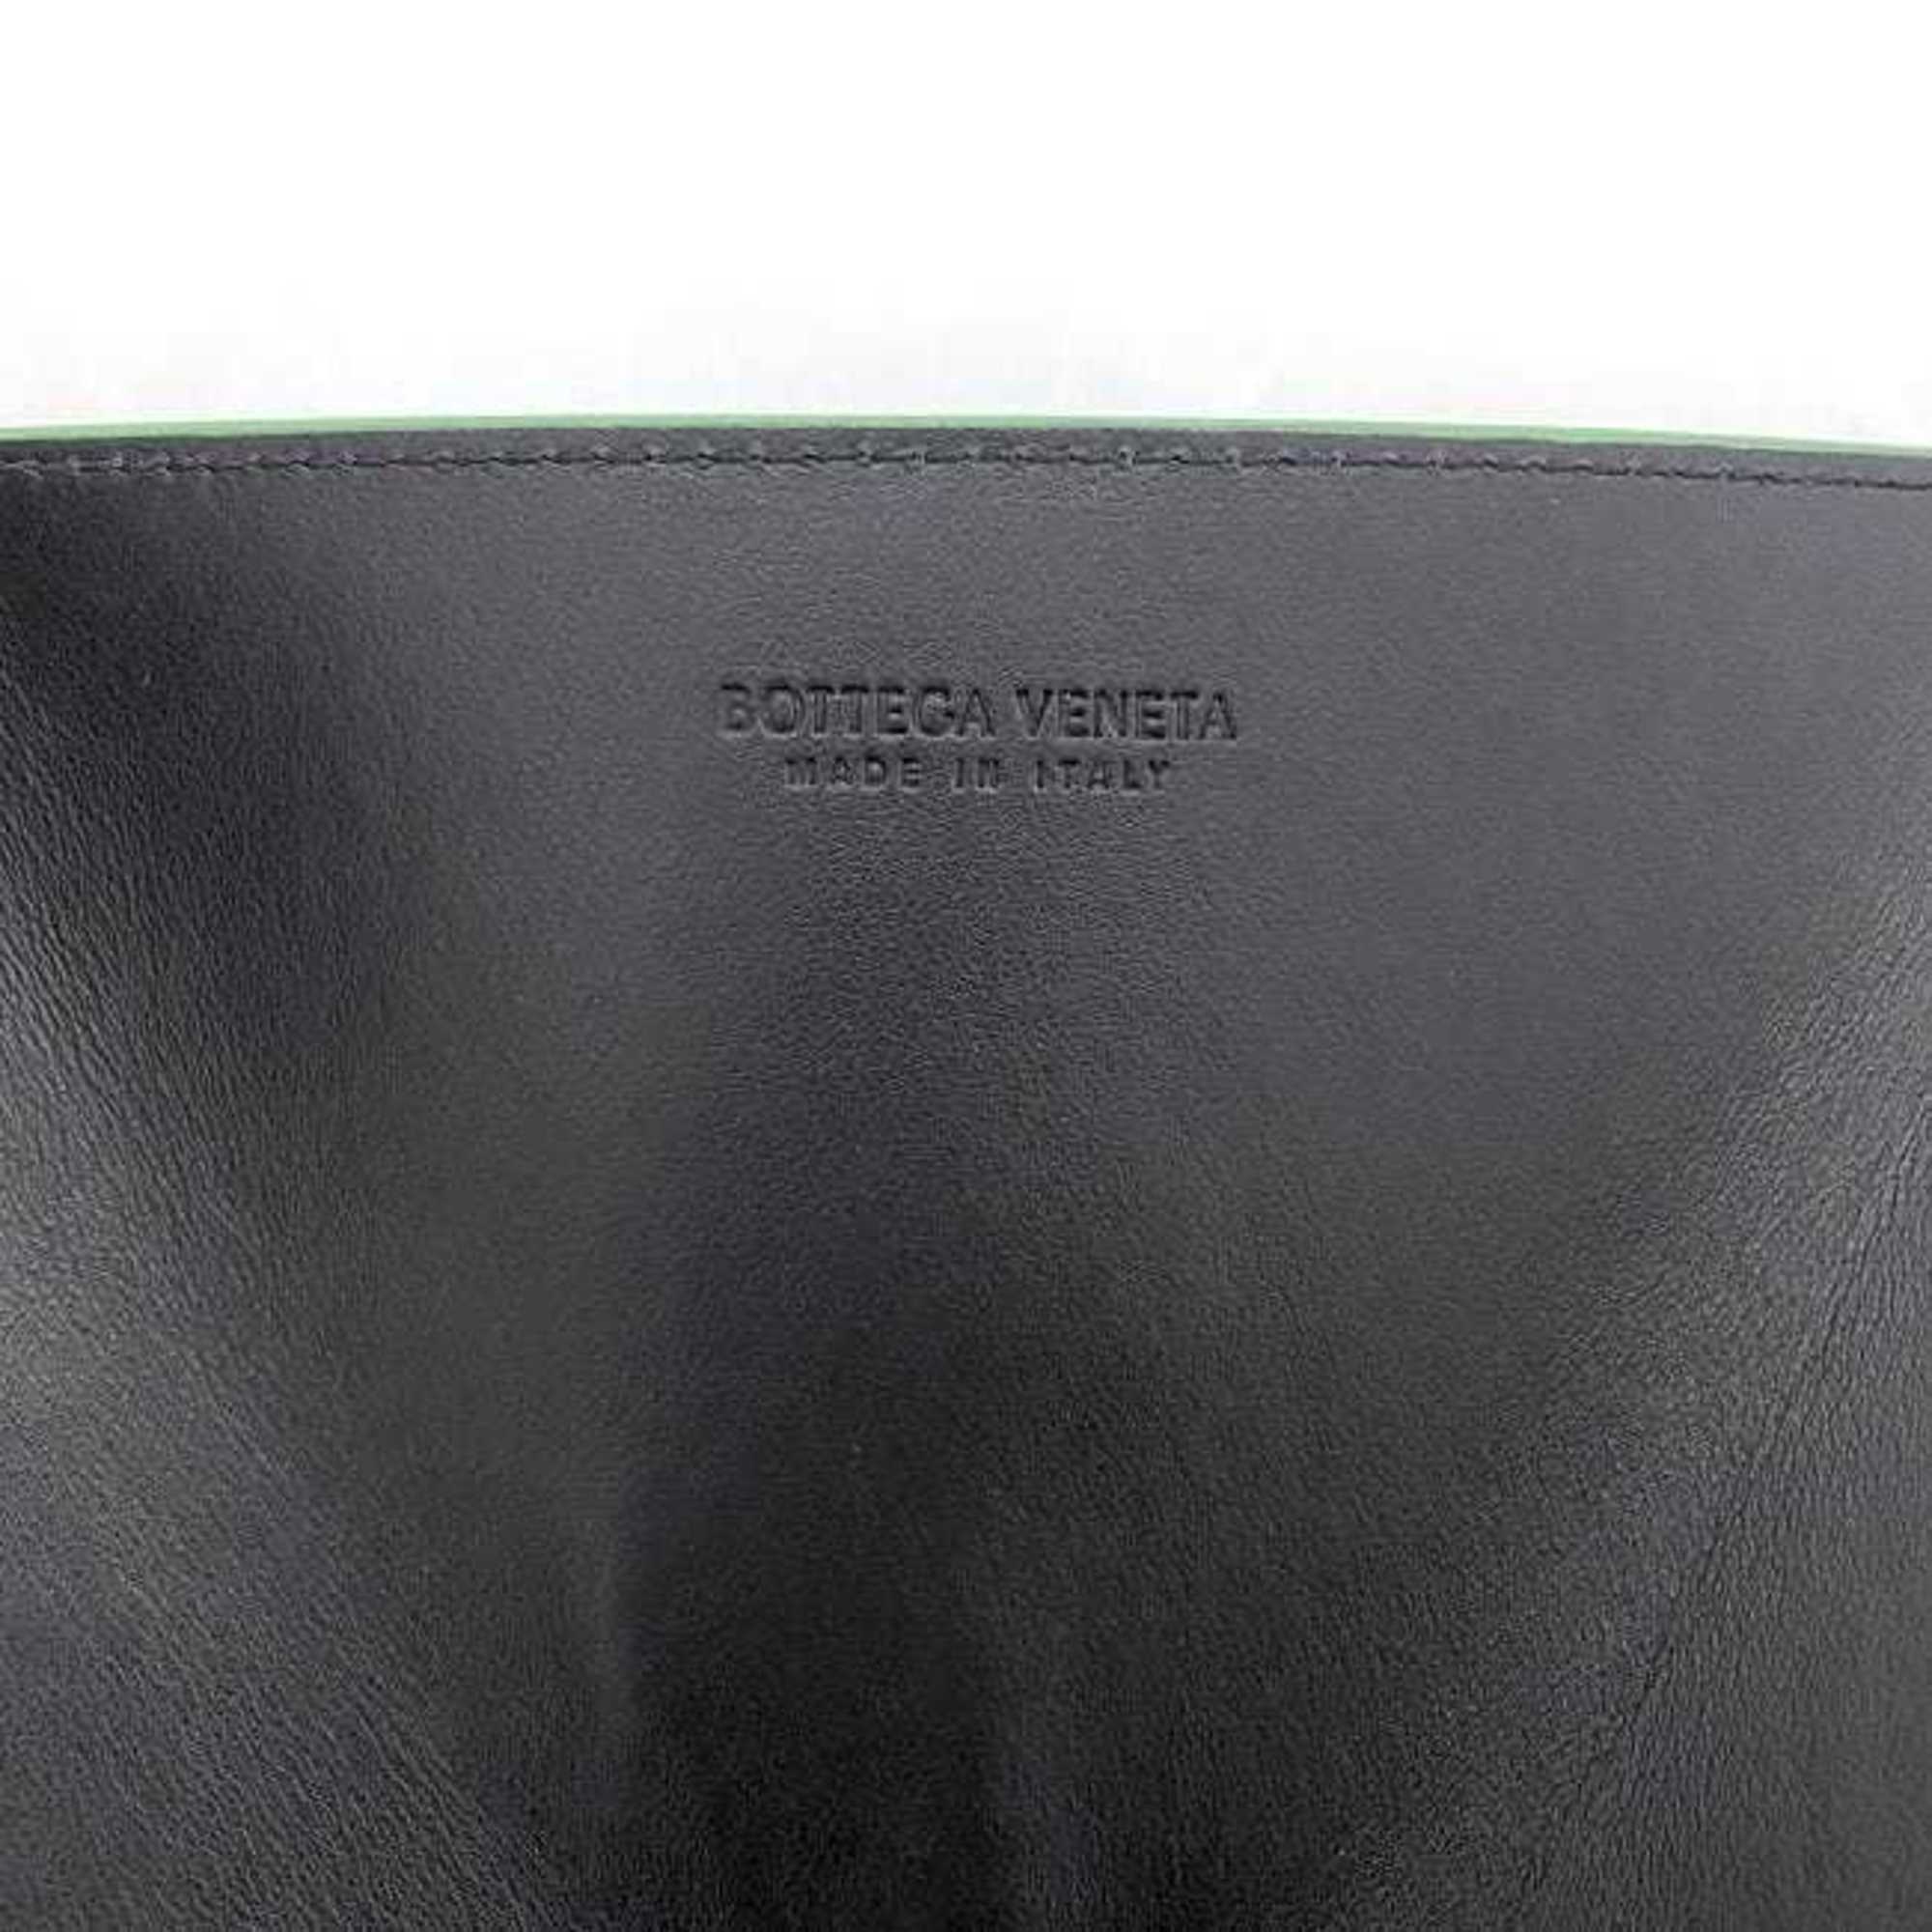 Bottega Veneta Pouch Green 651441 Leather BOTTEGA VENETA Square Coin Case Snap Button Women's